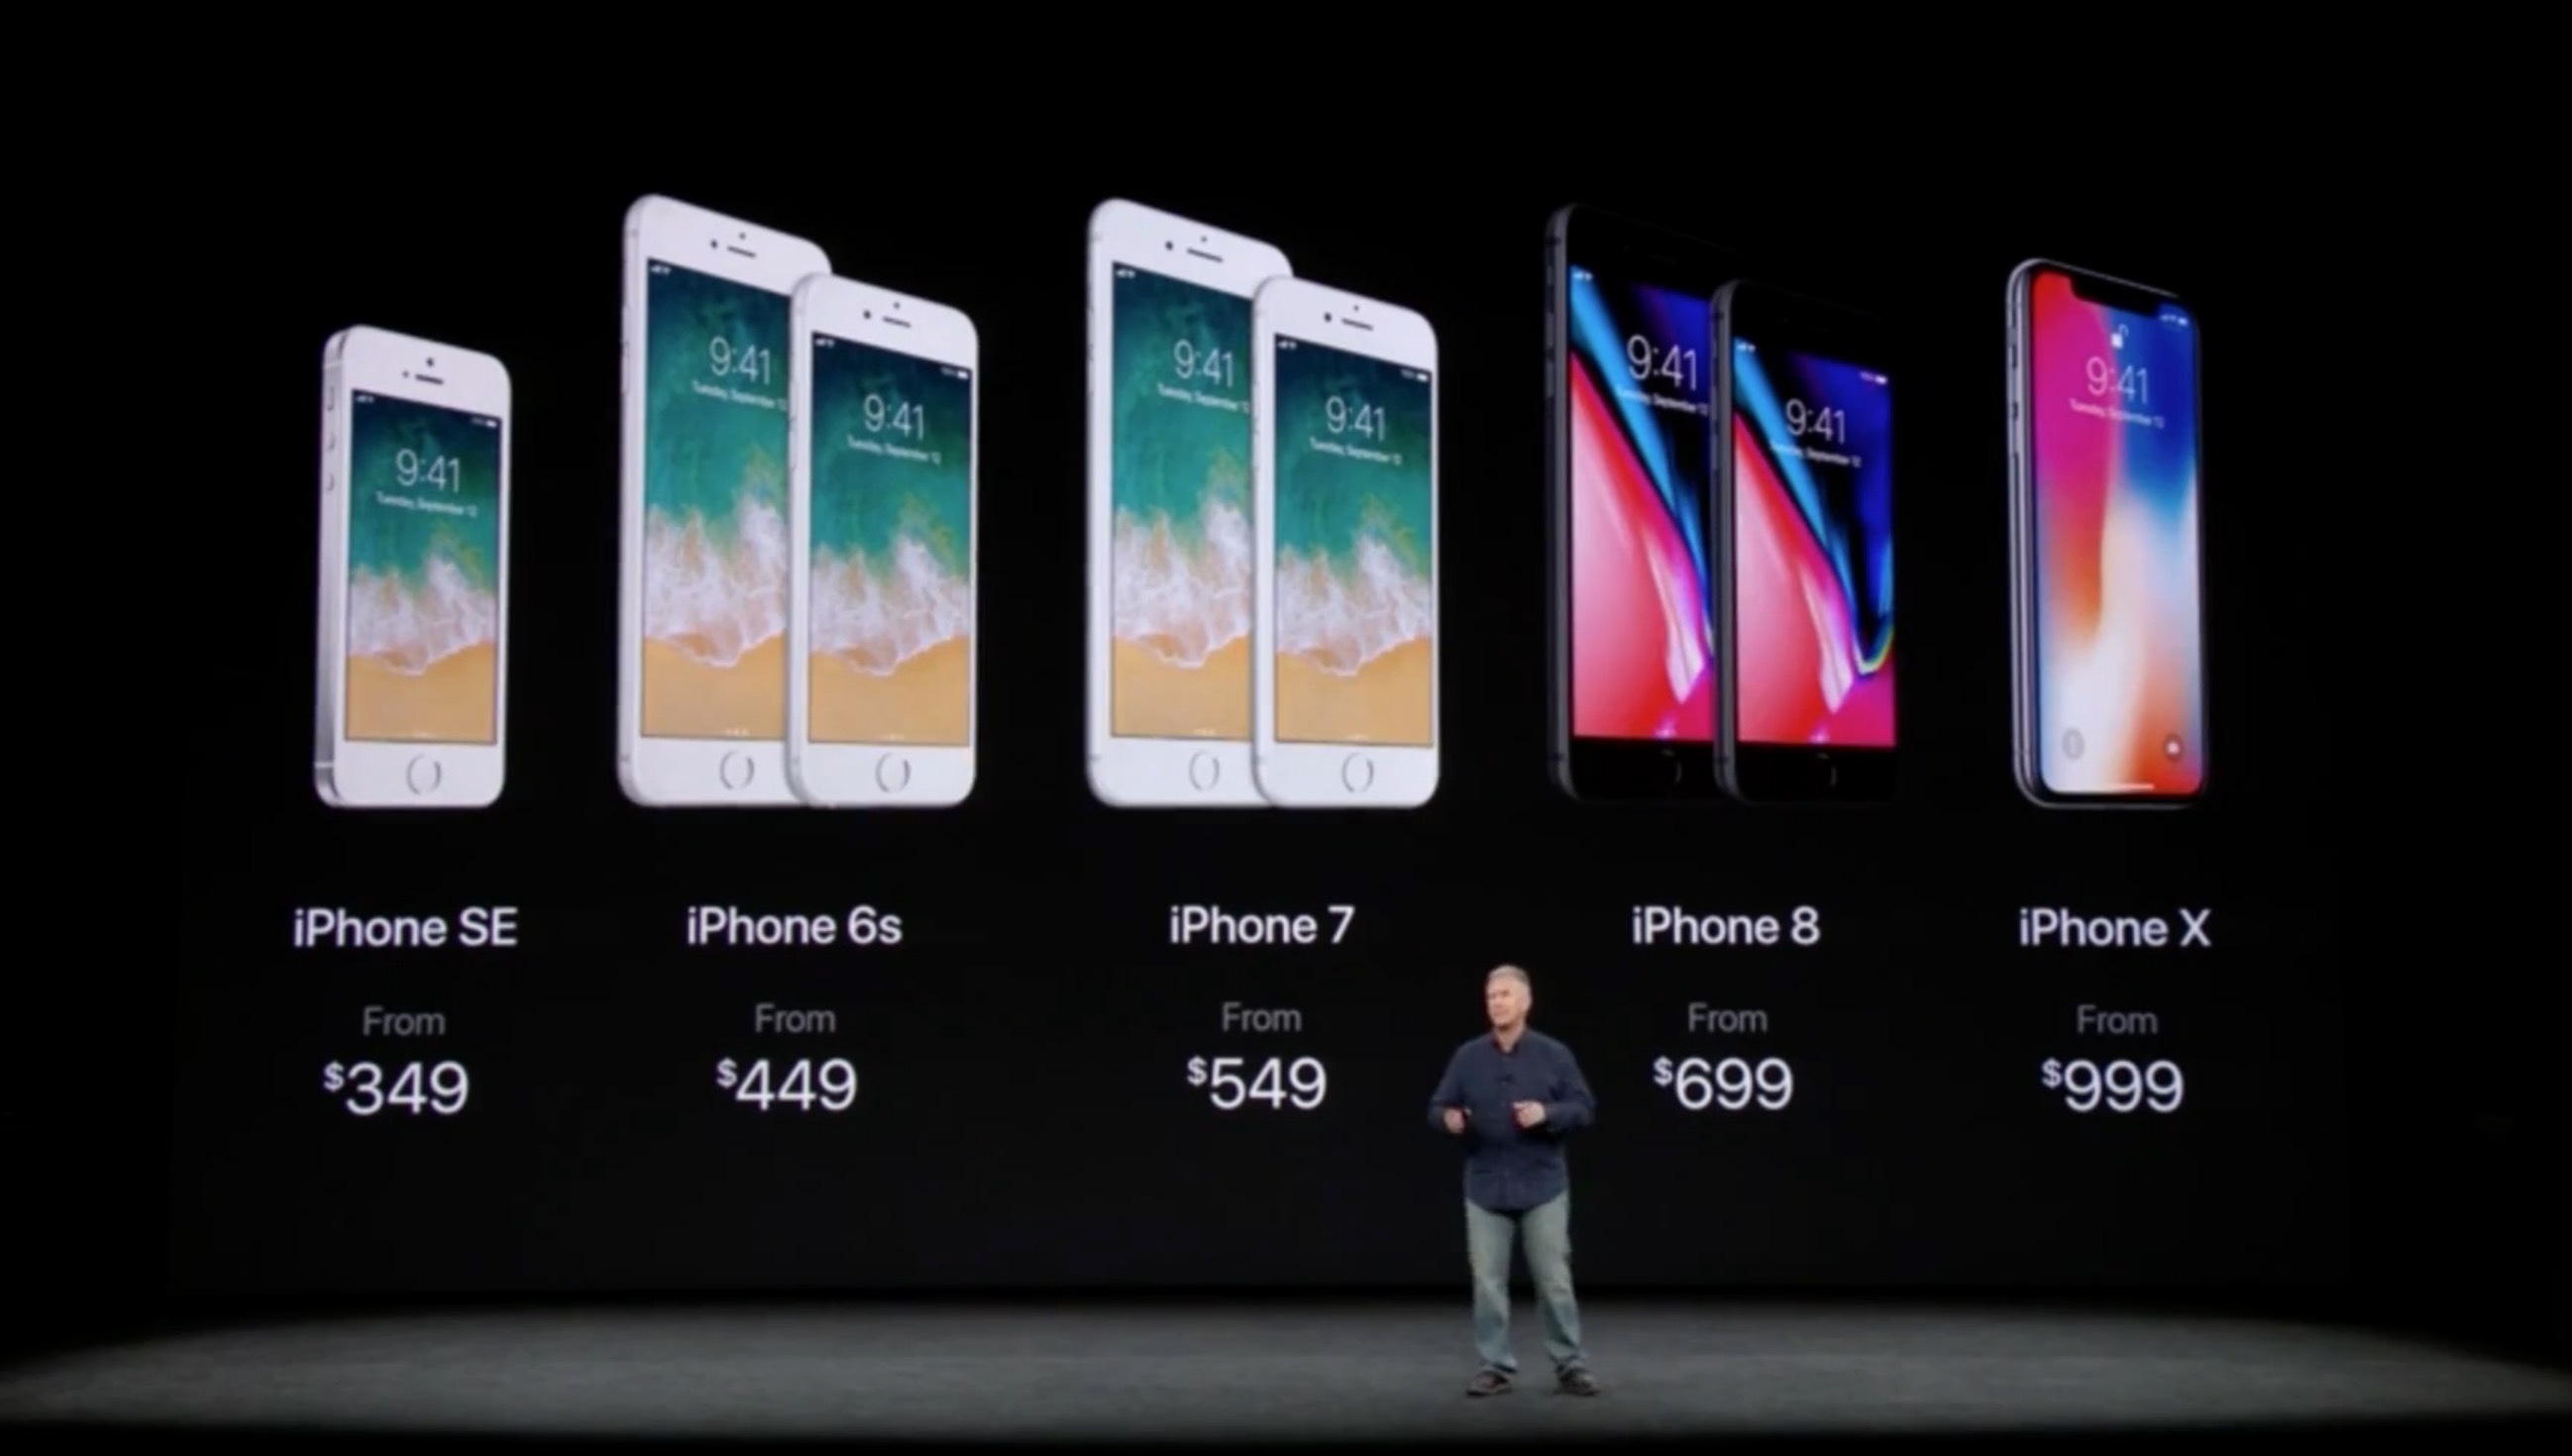 iPhone X将近1万的售价,苹果赚得比iPhone 7少